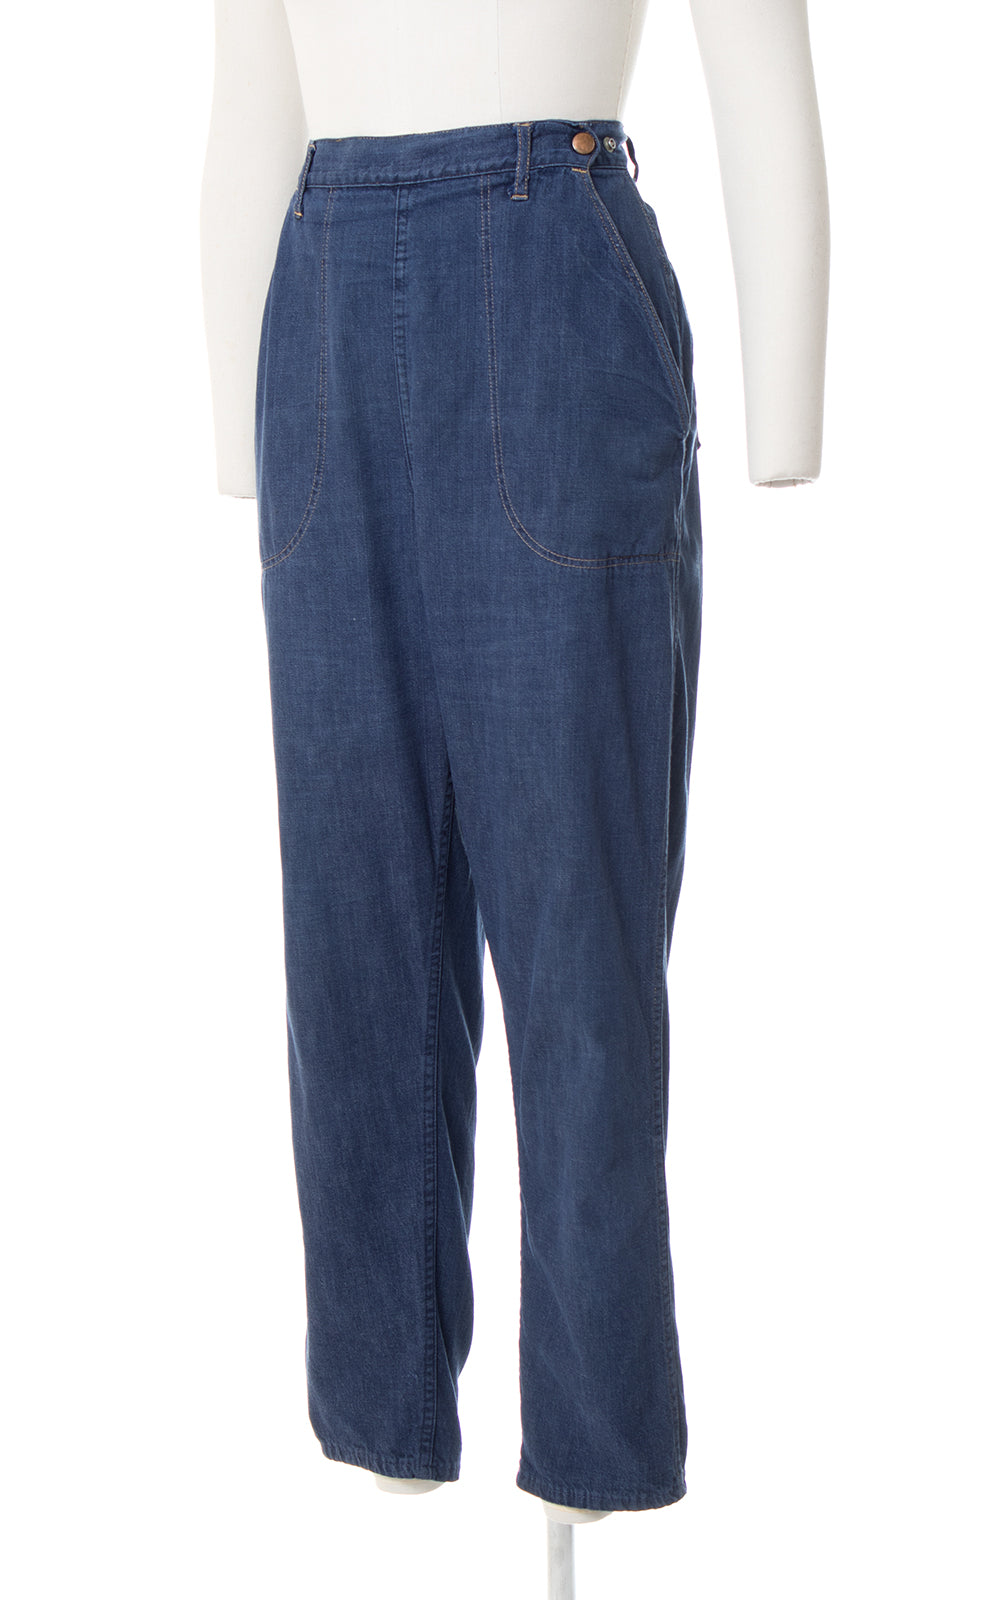 1950s Side Zip Denim Jeans